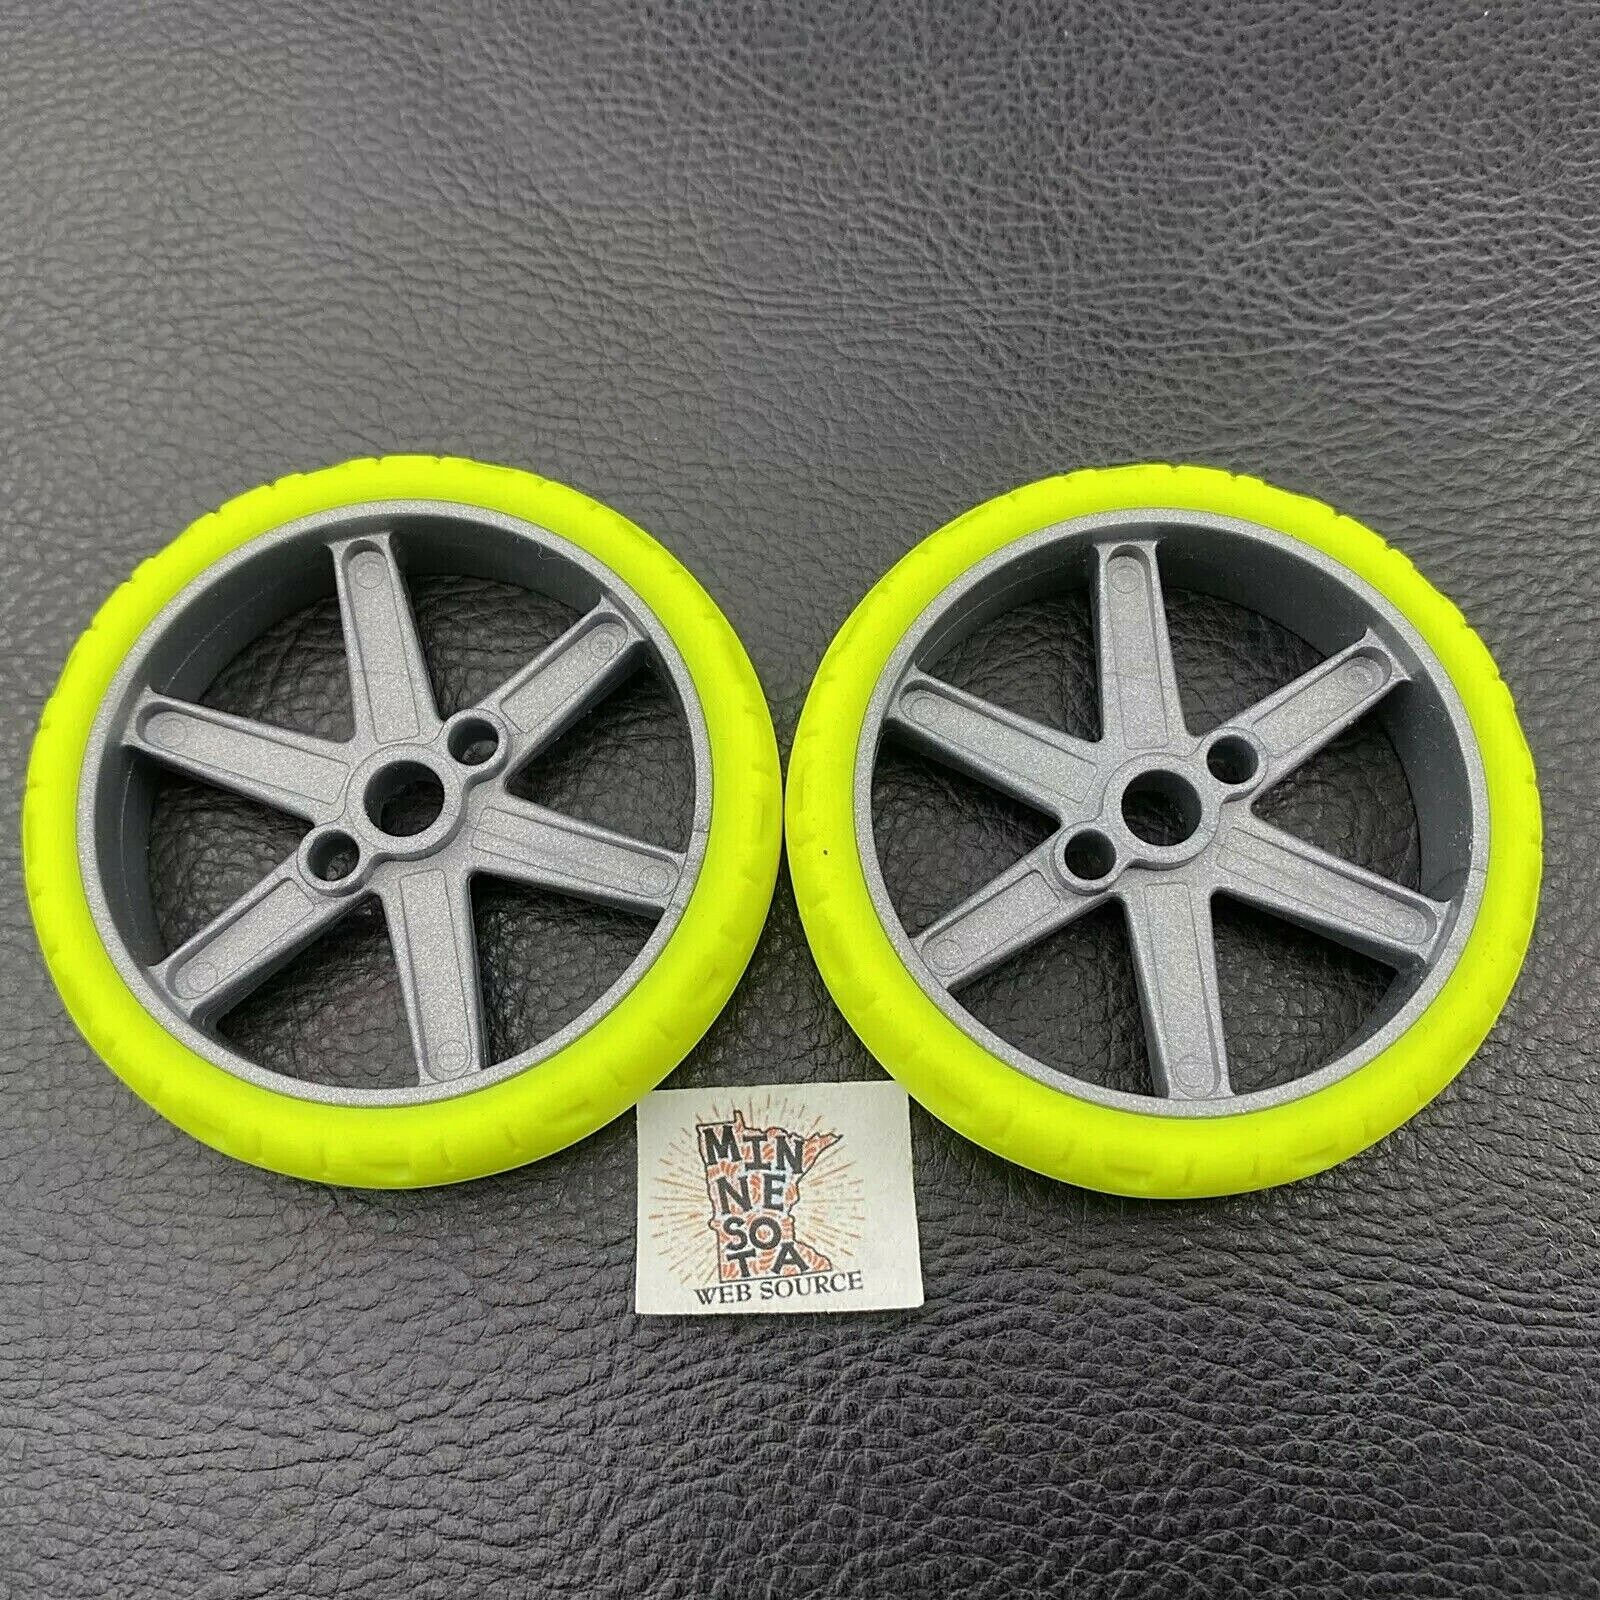 2 Knex Narrow Neon Yellow Motorcycle Tires Wheels 2.25" w/ Gray Hubs K'nex Parts